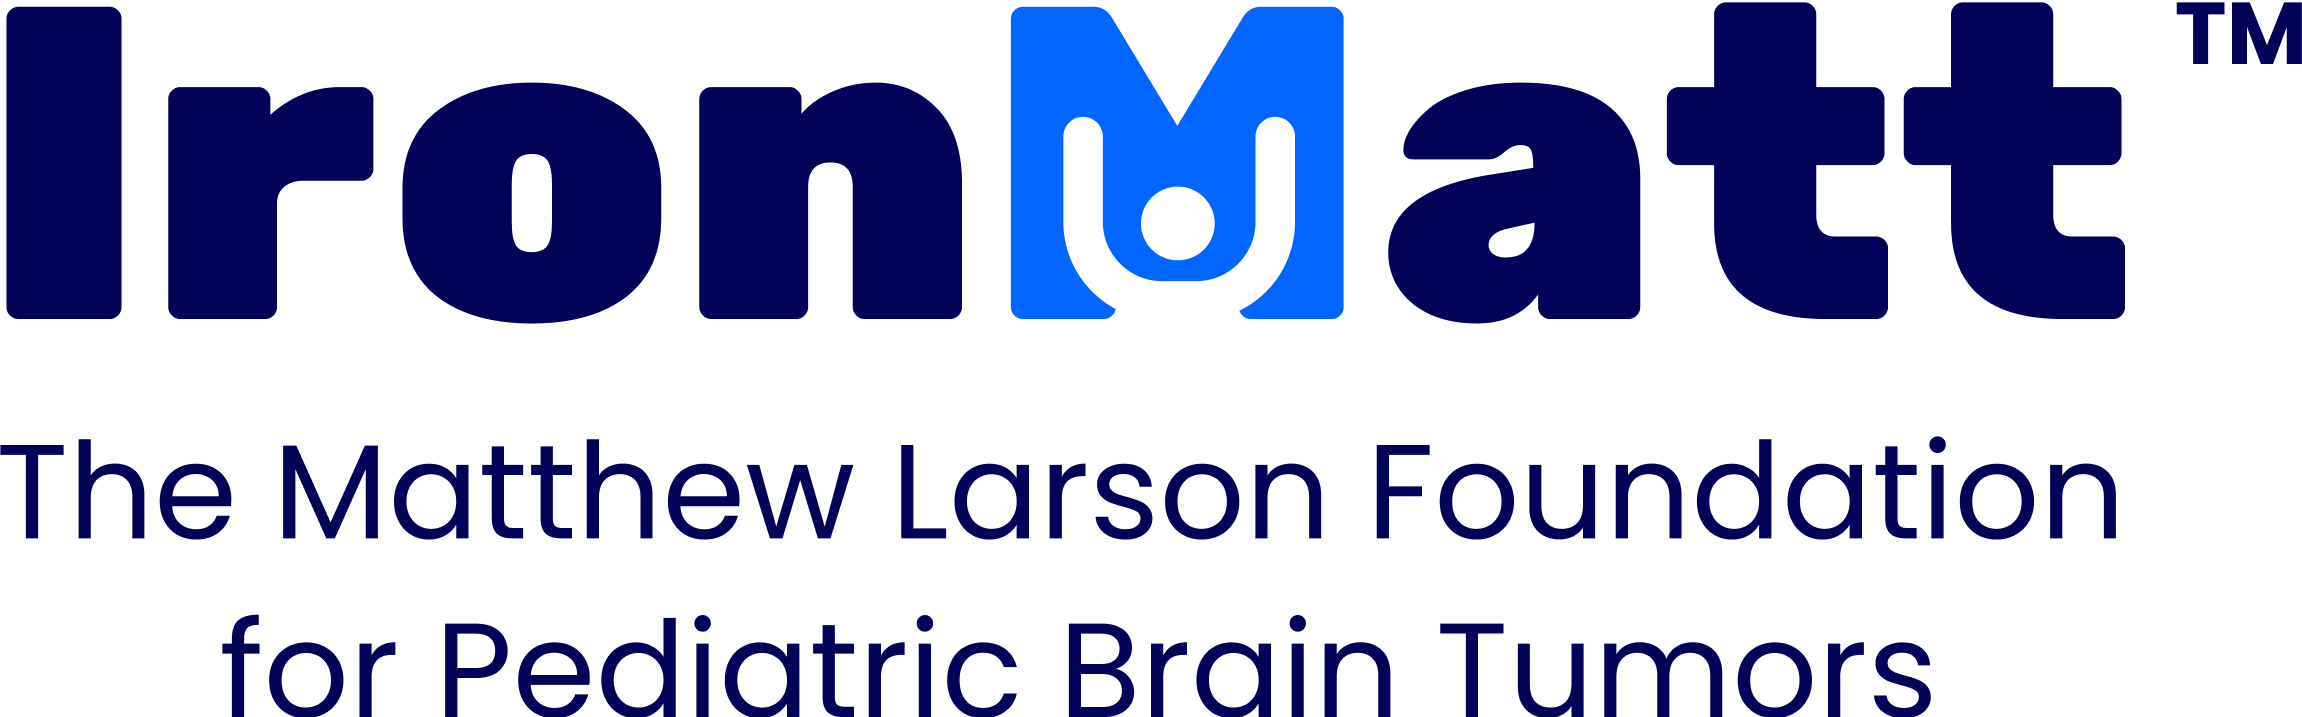 The Matthew Larson Foundation for Pediatric Brain Tumors (aka IronMatt) logo